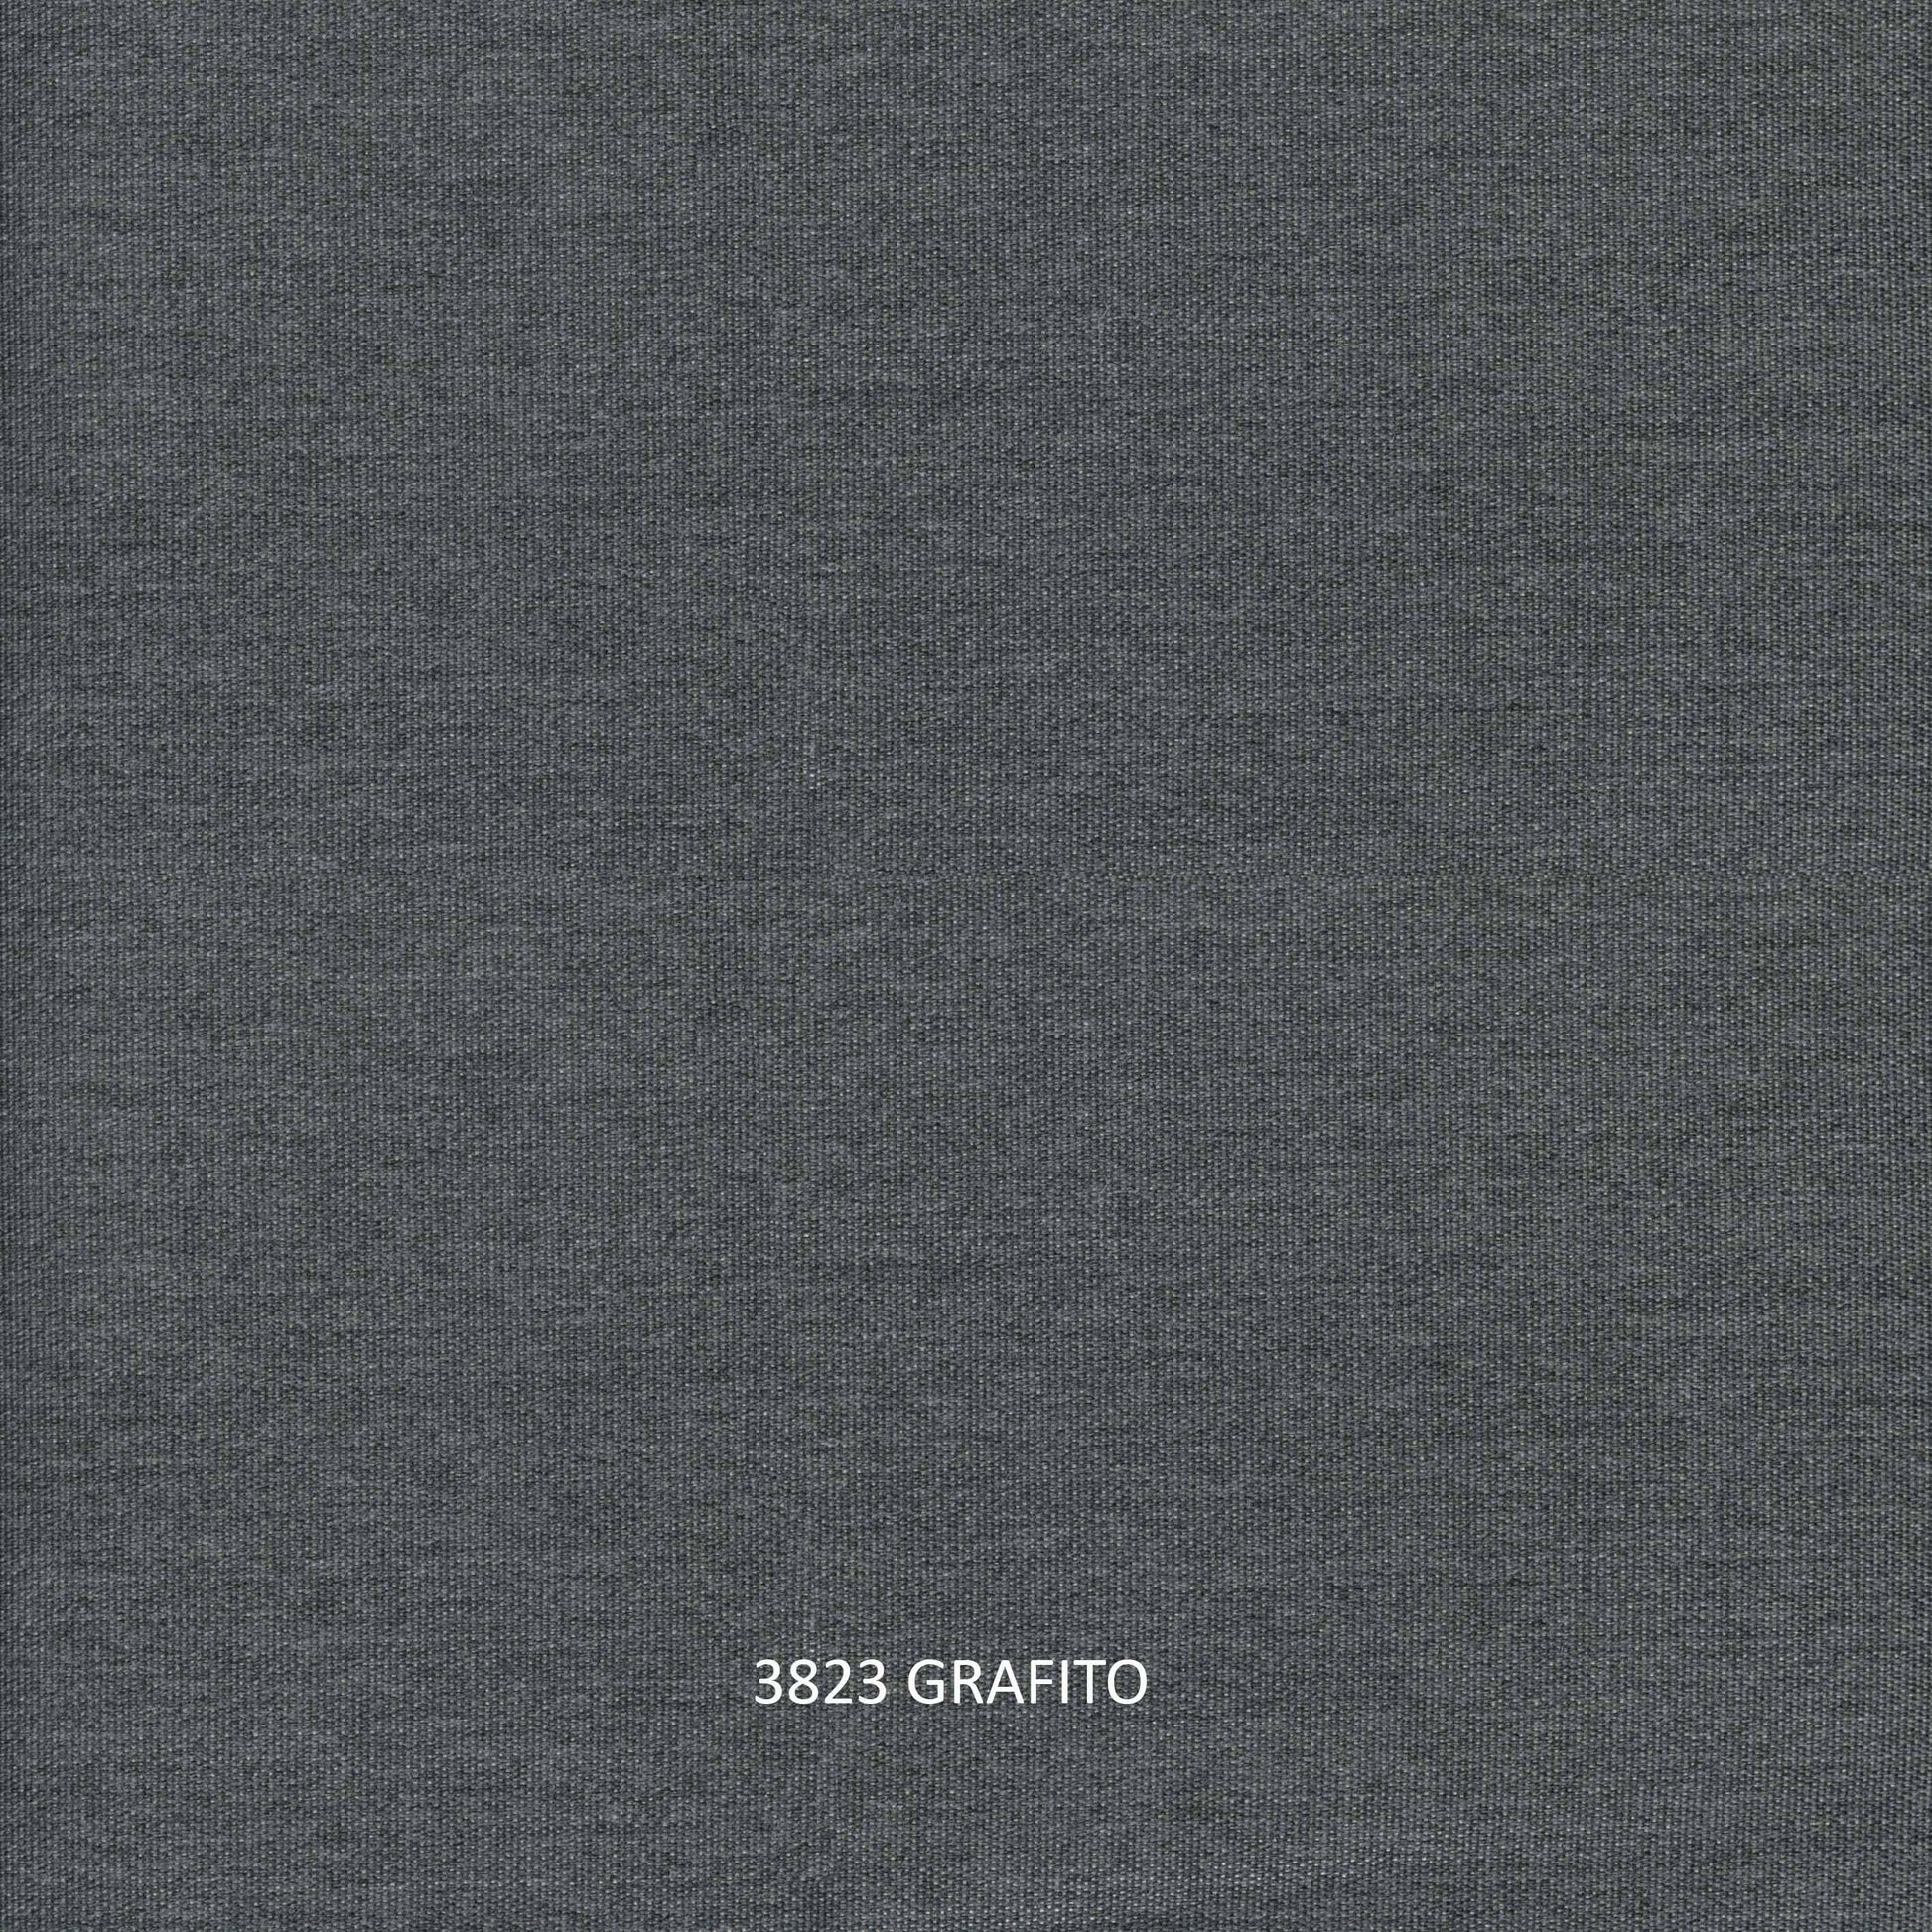 Ona Love Seat - PadioLiving - Ona Love Seat - Outdoor Love Seat - Dark Grey 21mm Strap / Metal-Grafito(£3626) - PadioLiving